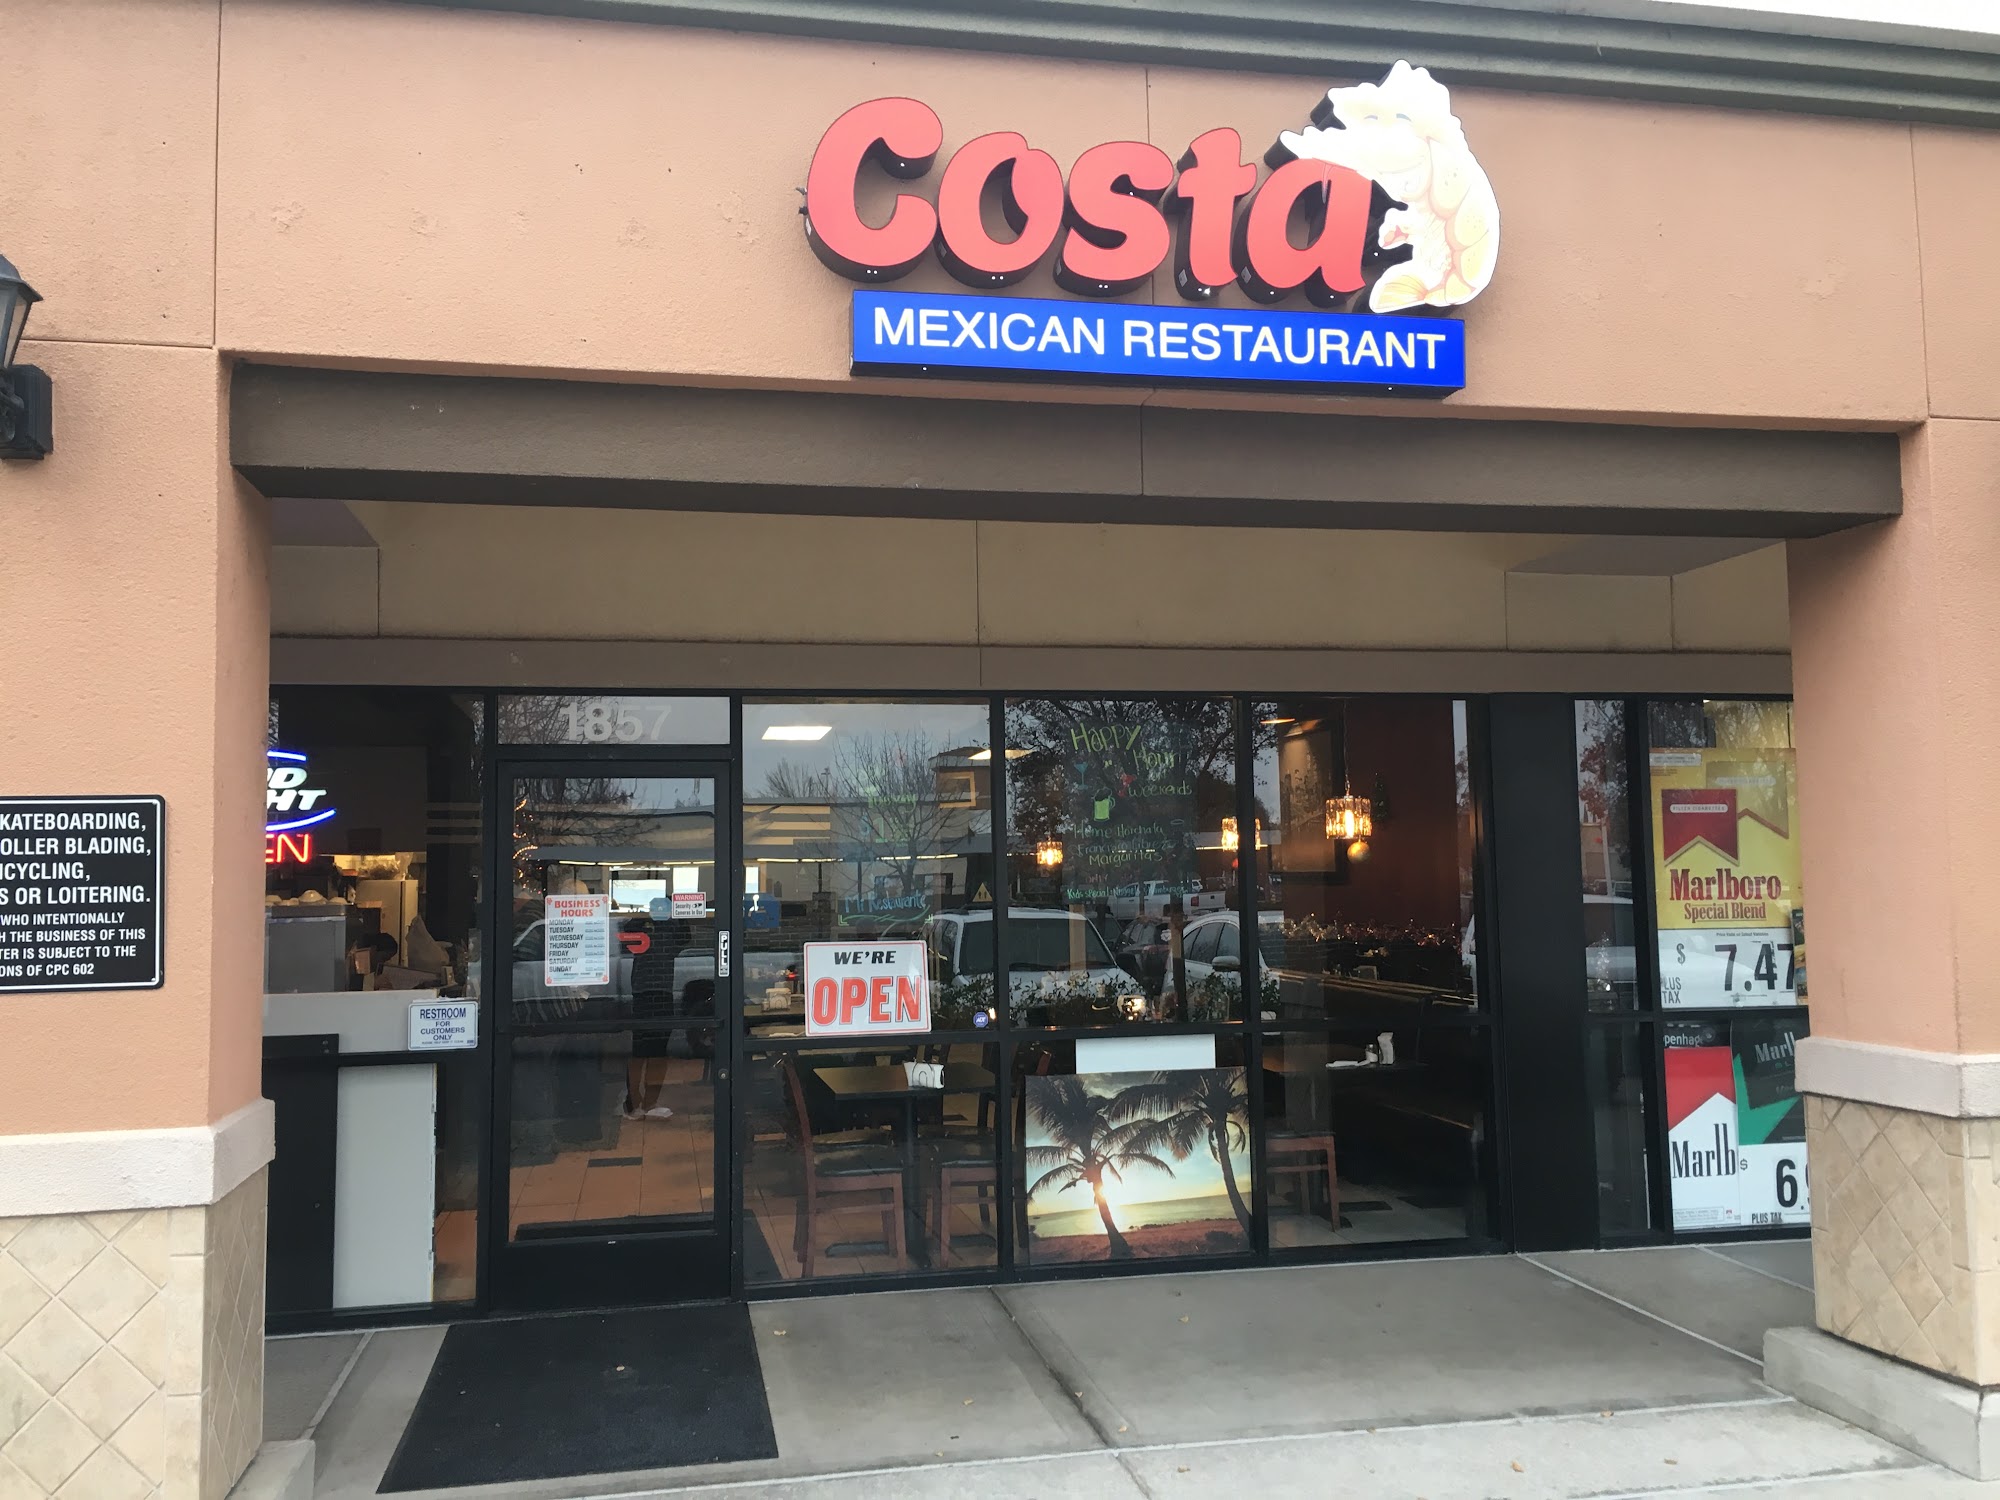 Costa Restaurant